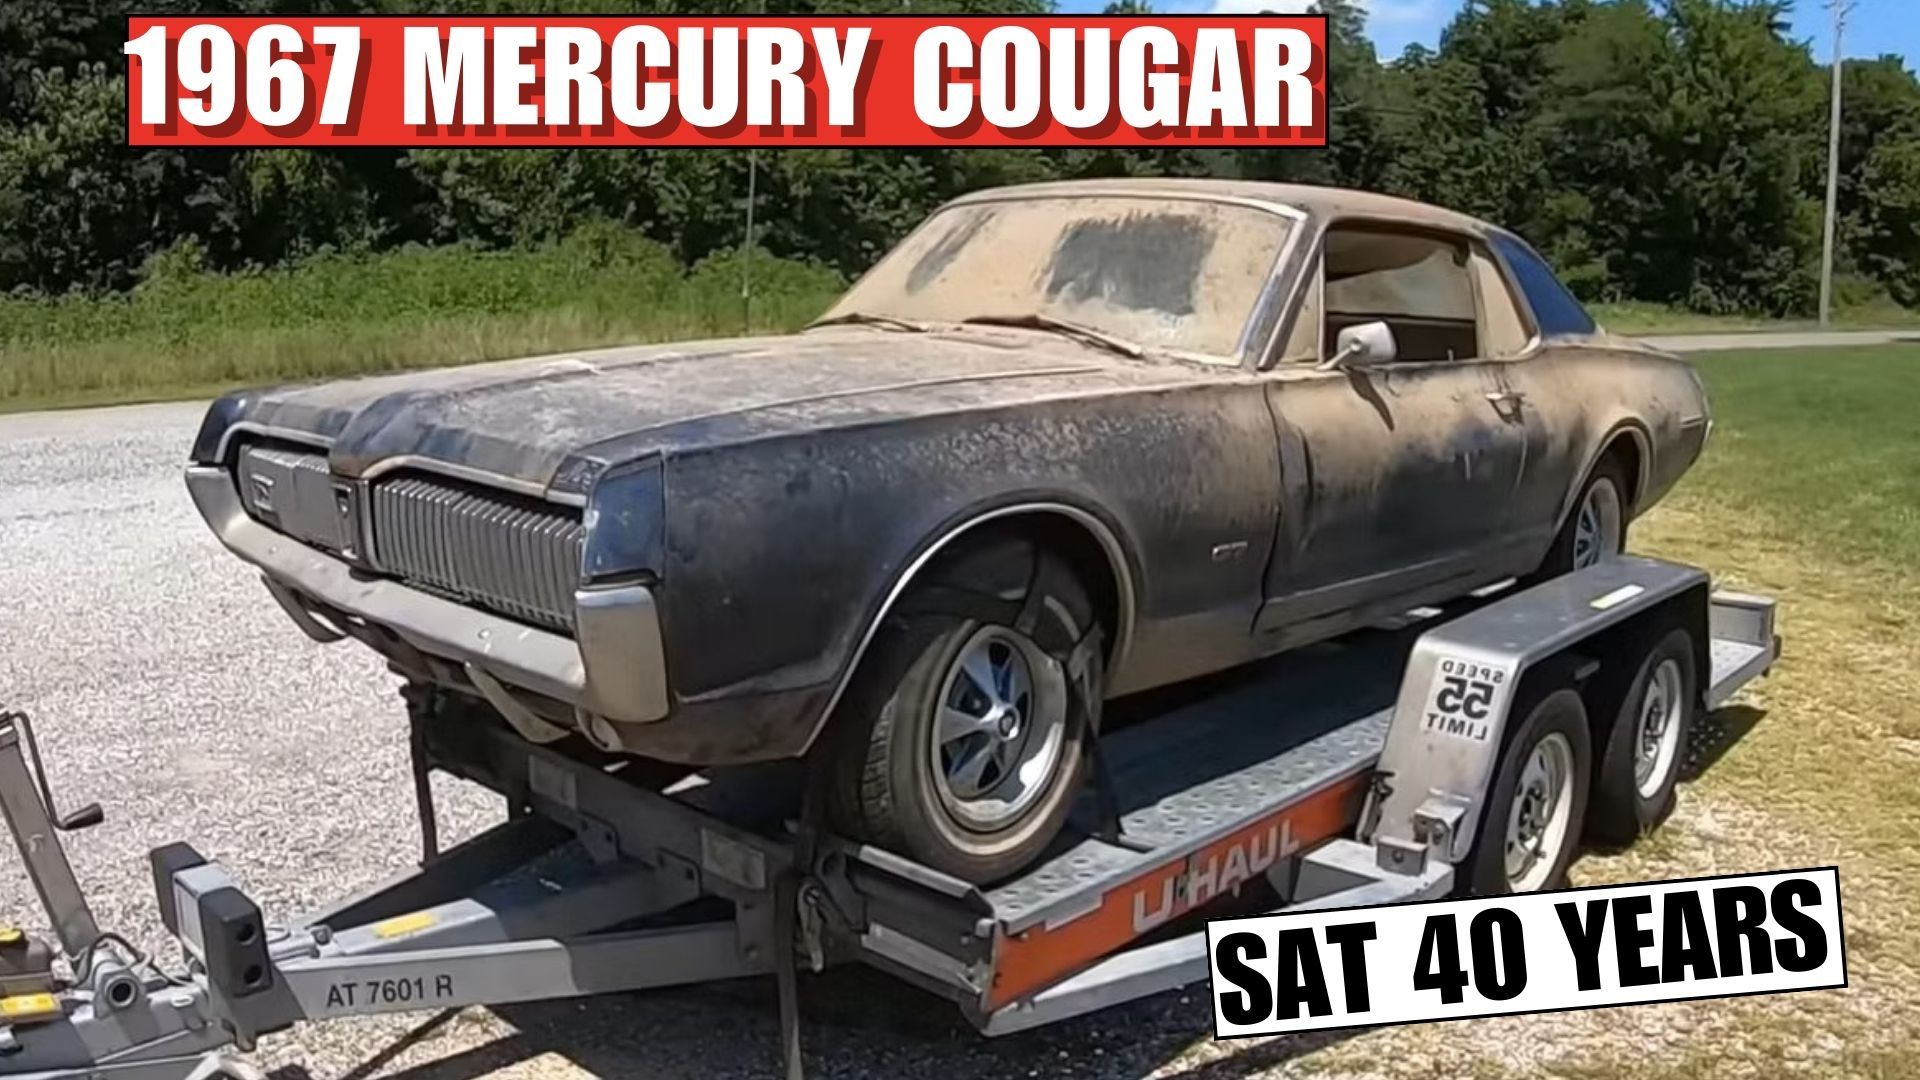 1967 Mercury Cougar on Trailer